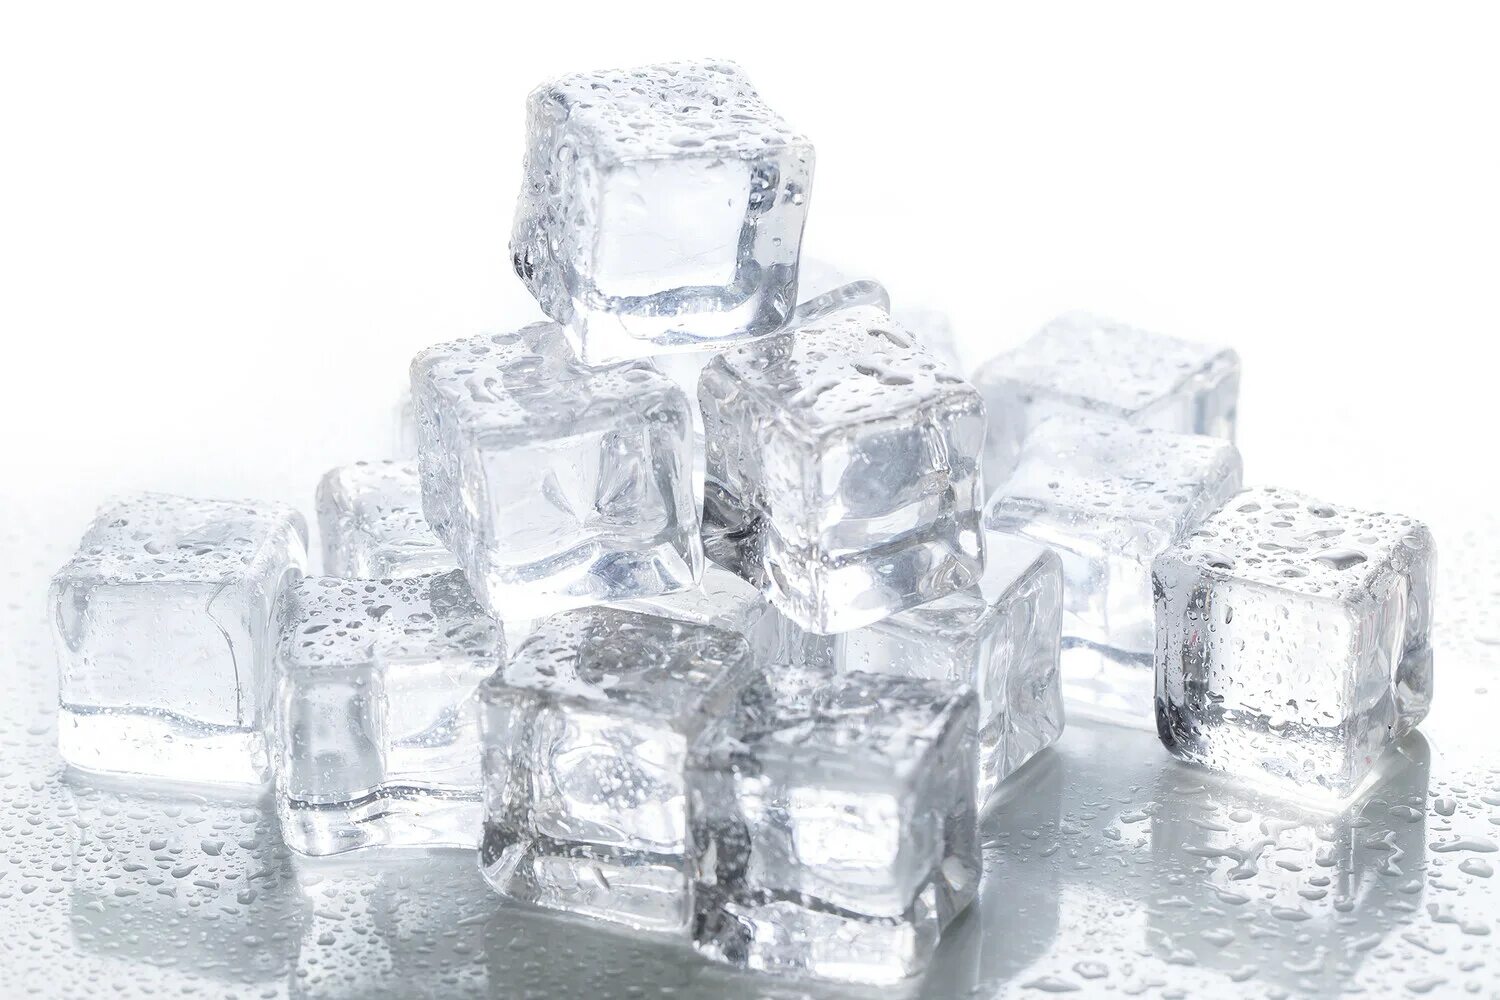 Сколько кубиков льда. Ice Cube лед. Ice Cube кубик льда. Кубики льда на белом фоне. Кубики льда без фона.